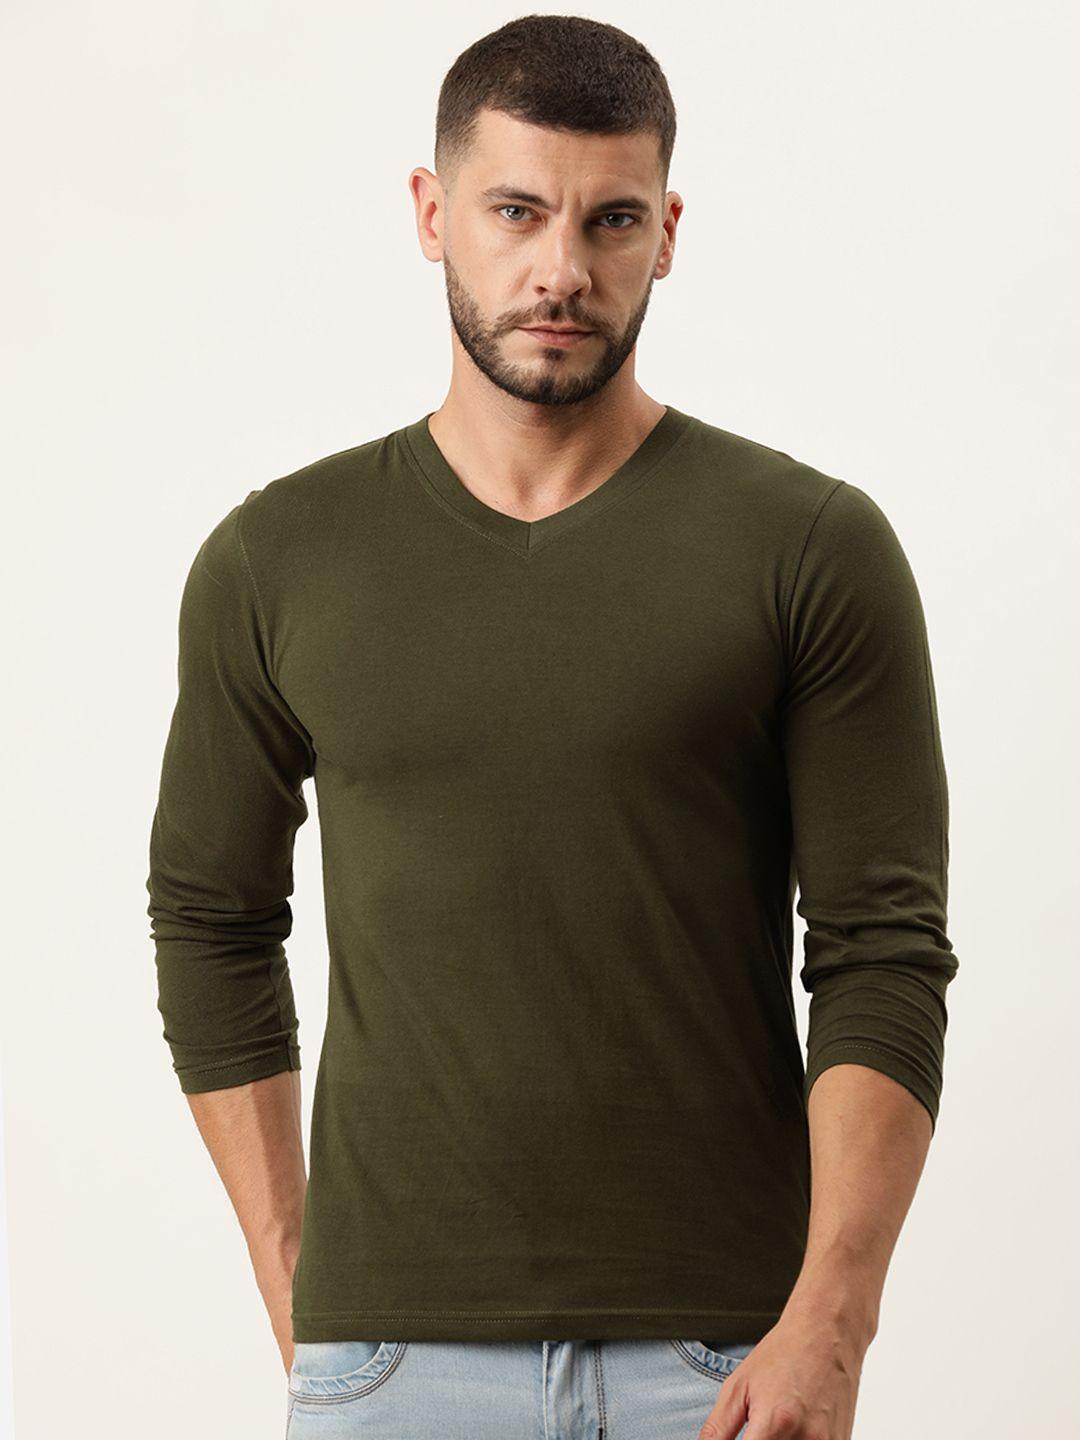 arise men olive green v-neck bio finish cotton t-shirt